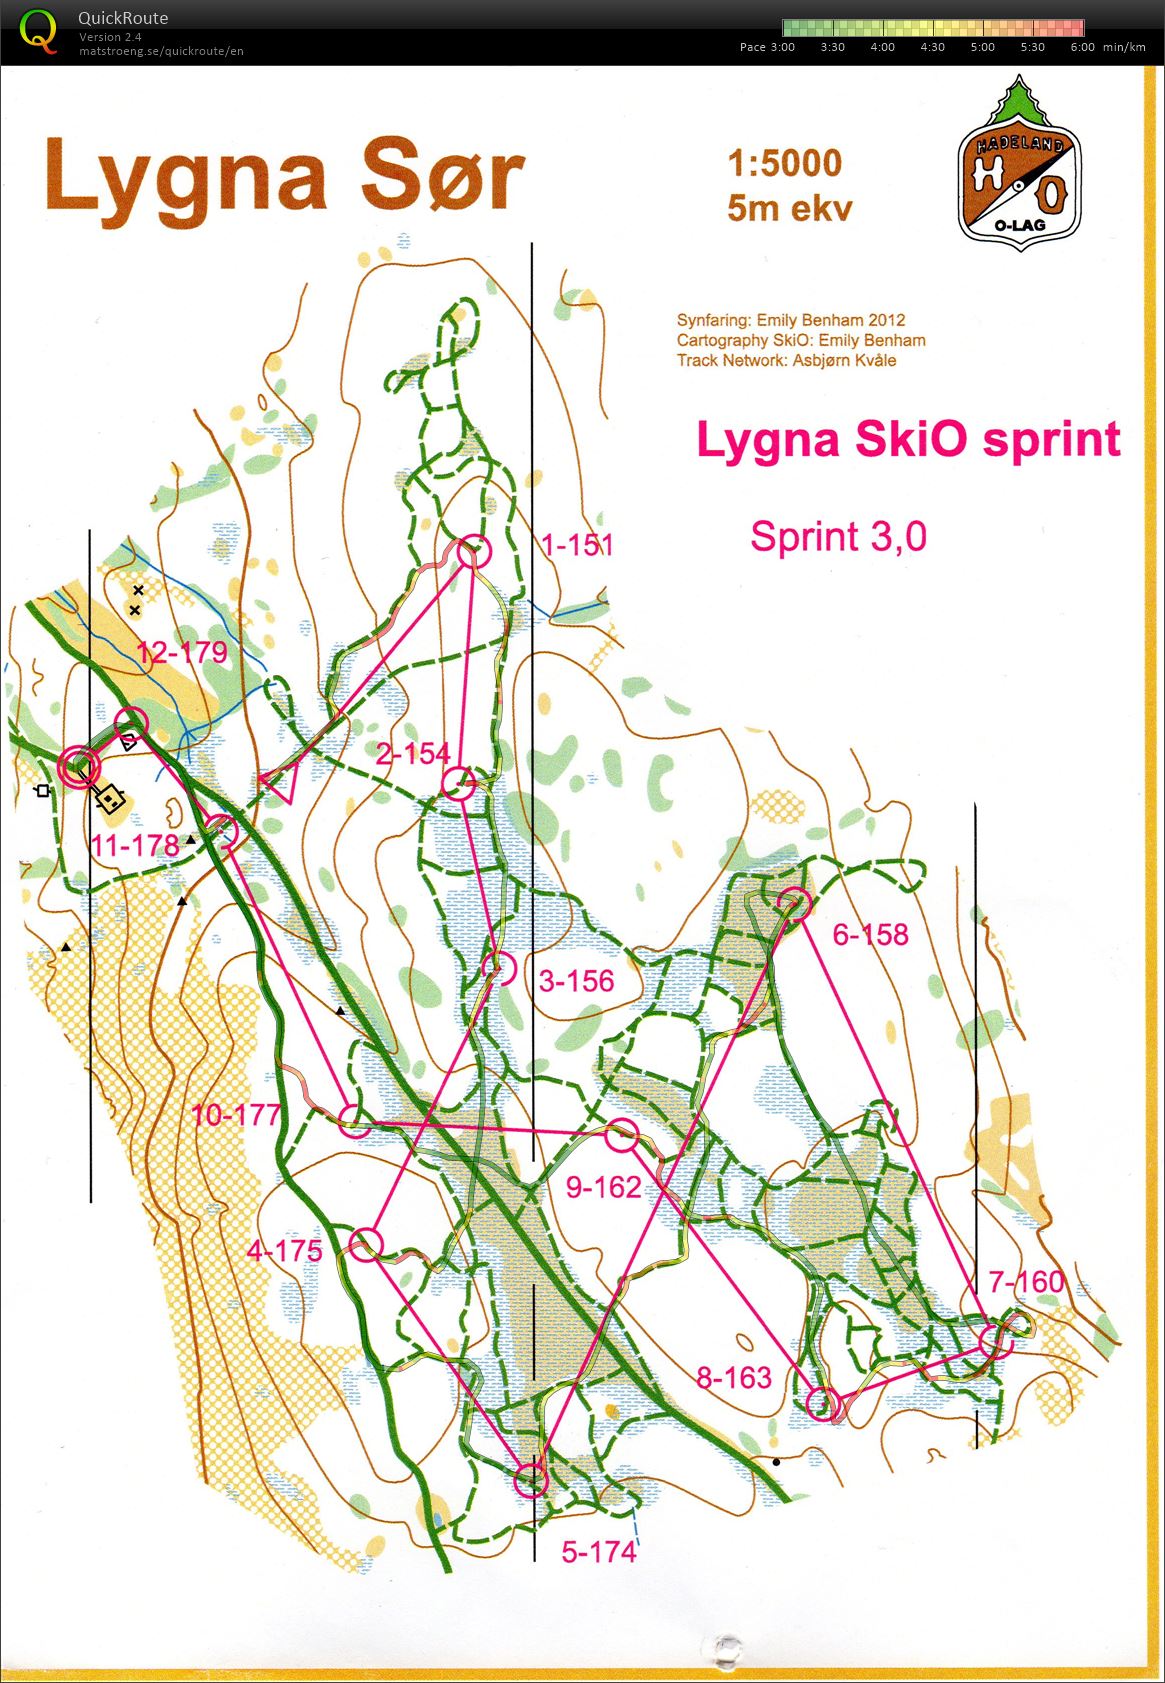 Lygna NC sr ski-o sprint (03.01.2015)